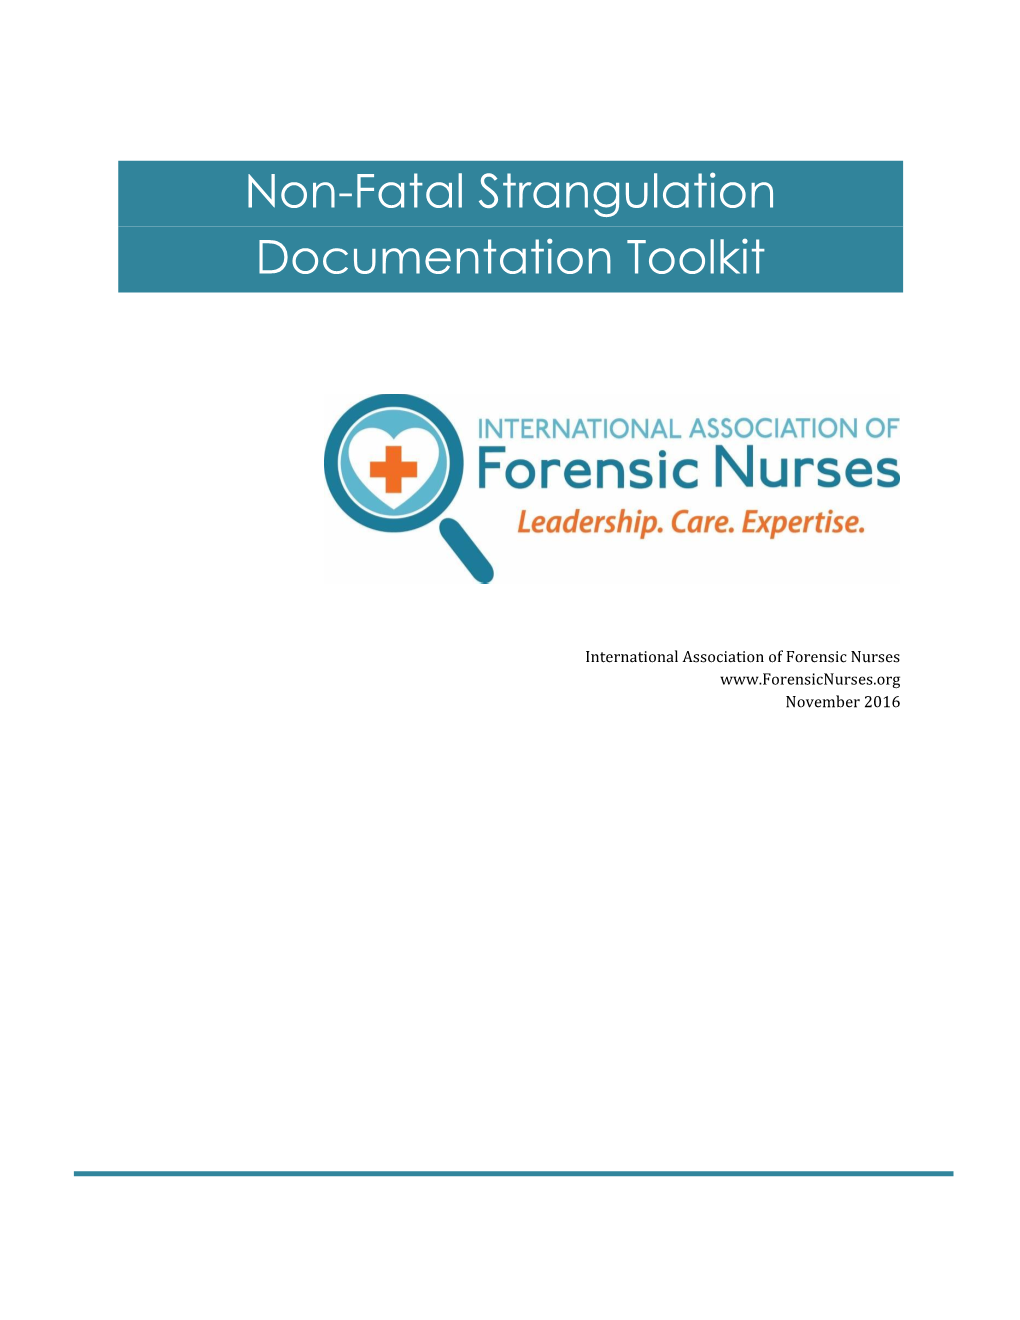 Non-Fatal Strangulation Documentation Toolkit